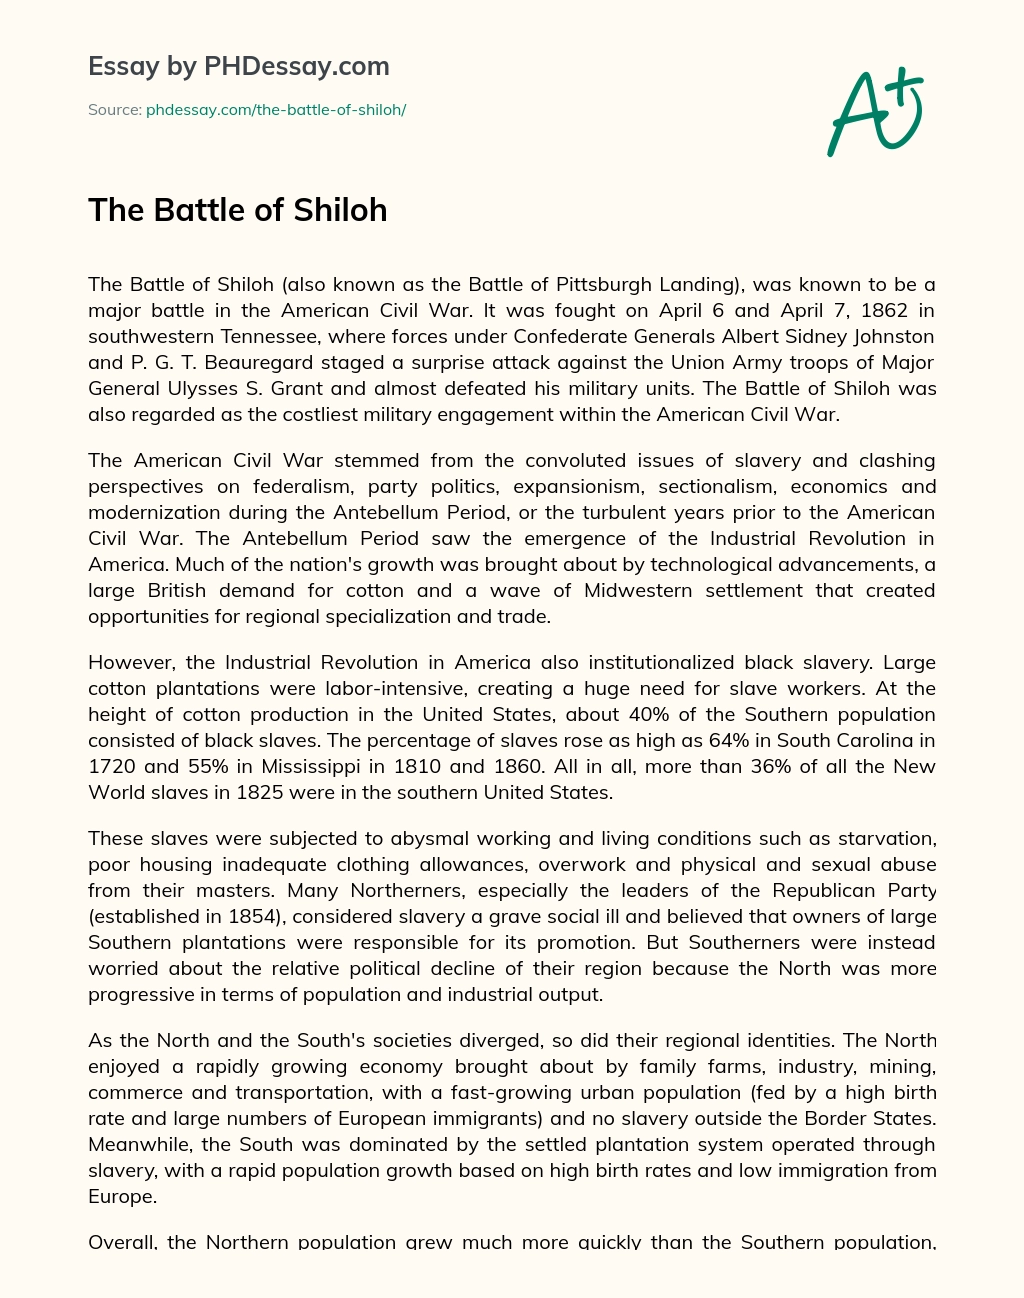 The Battle of Shiloh essay